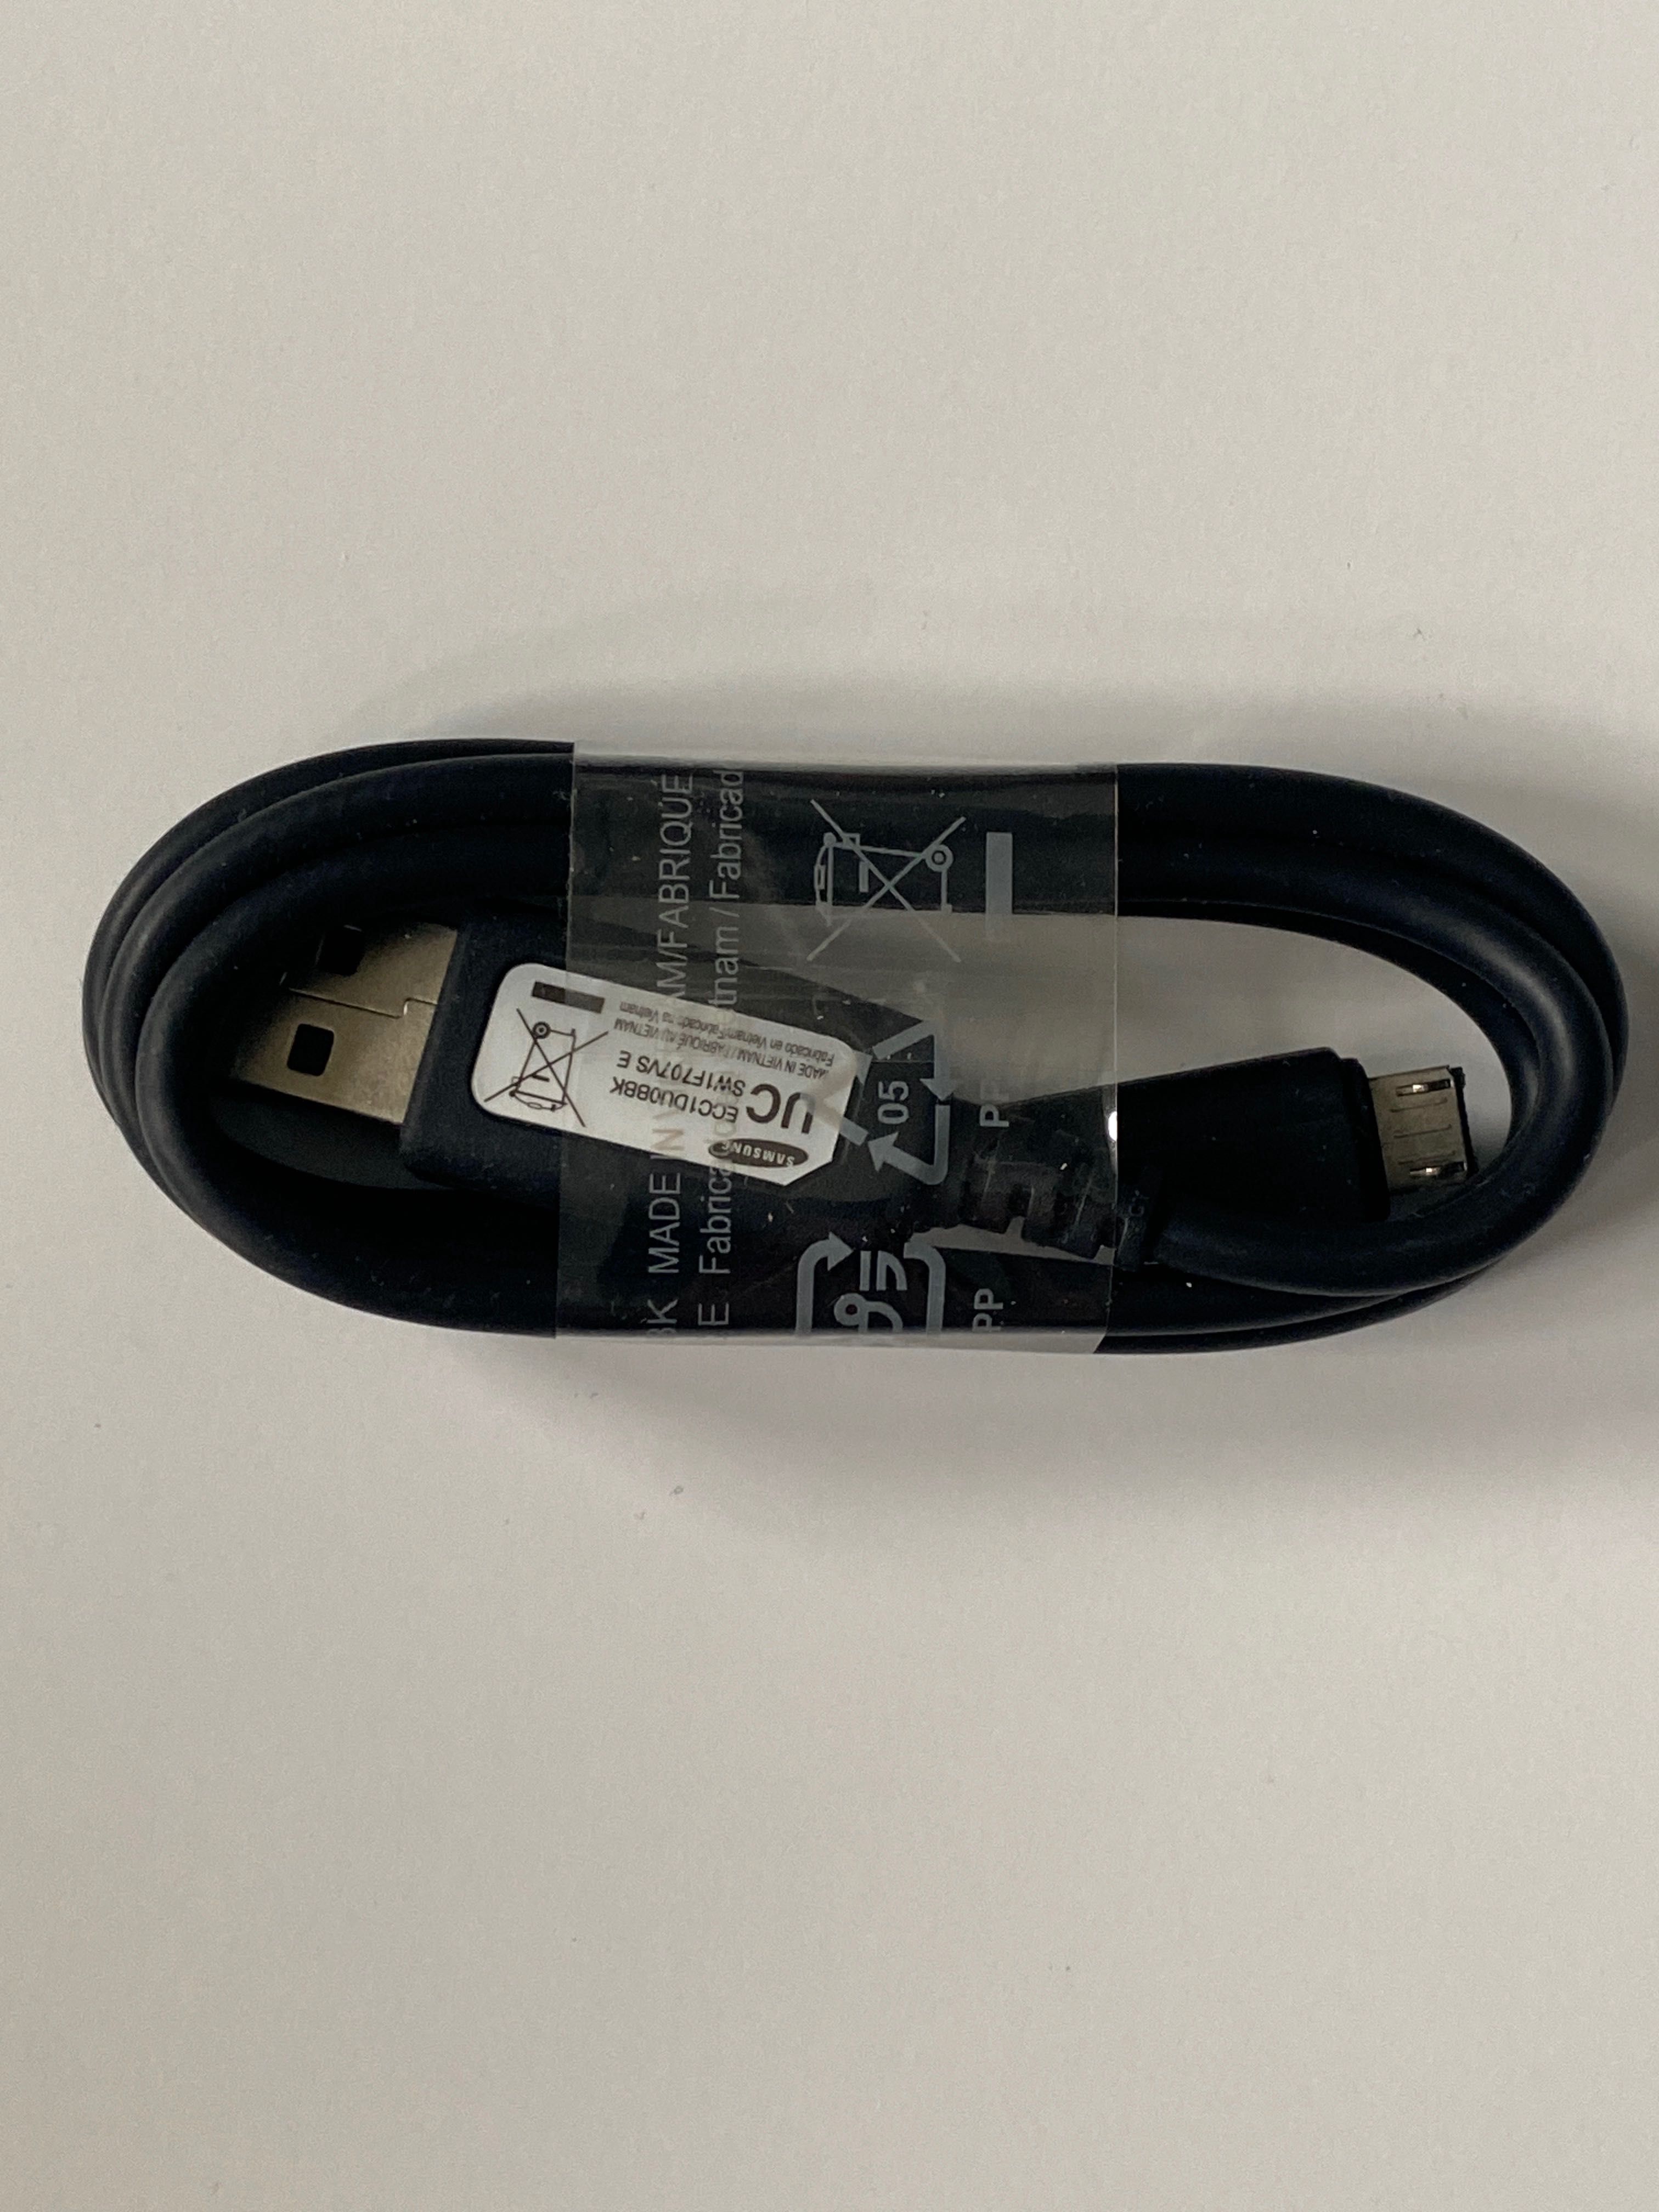 3 szt kabli USB oryginalne kable 2x micro USB +gratis 1x SGH-L760